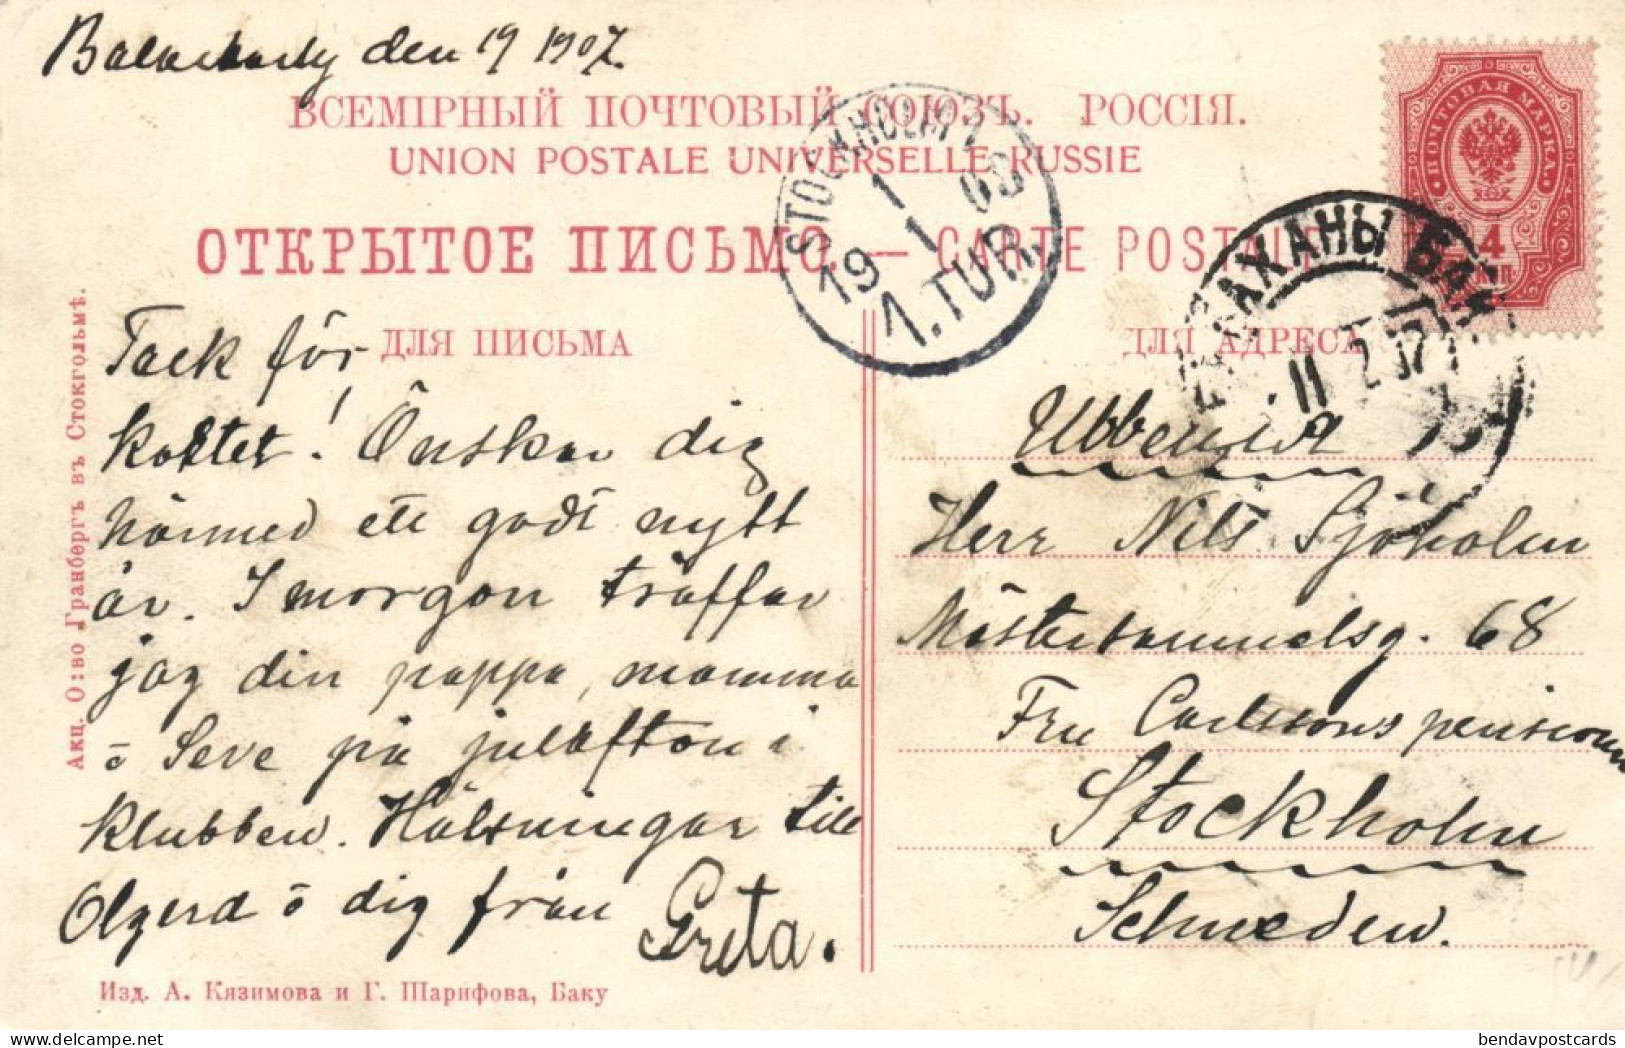 Azerbaijan Russia, BAKU BACOU, Railway Station (1907) Postcard - Azerbaiyan